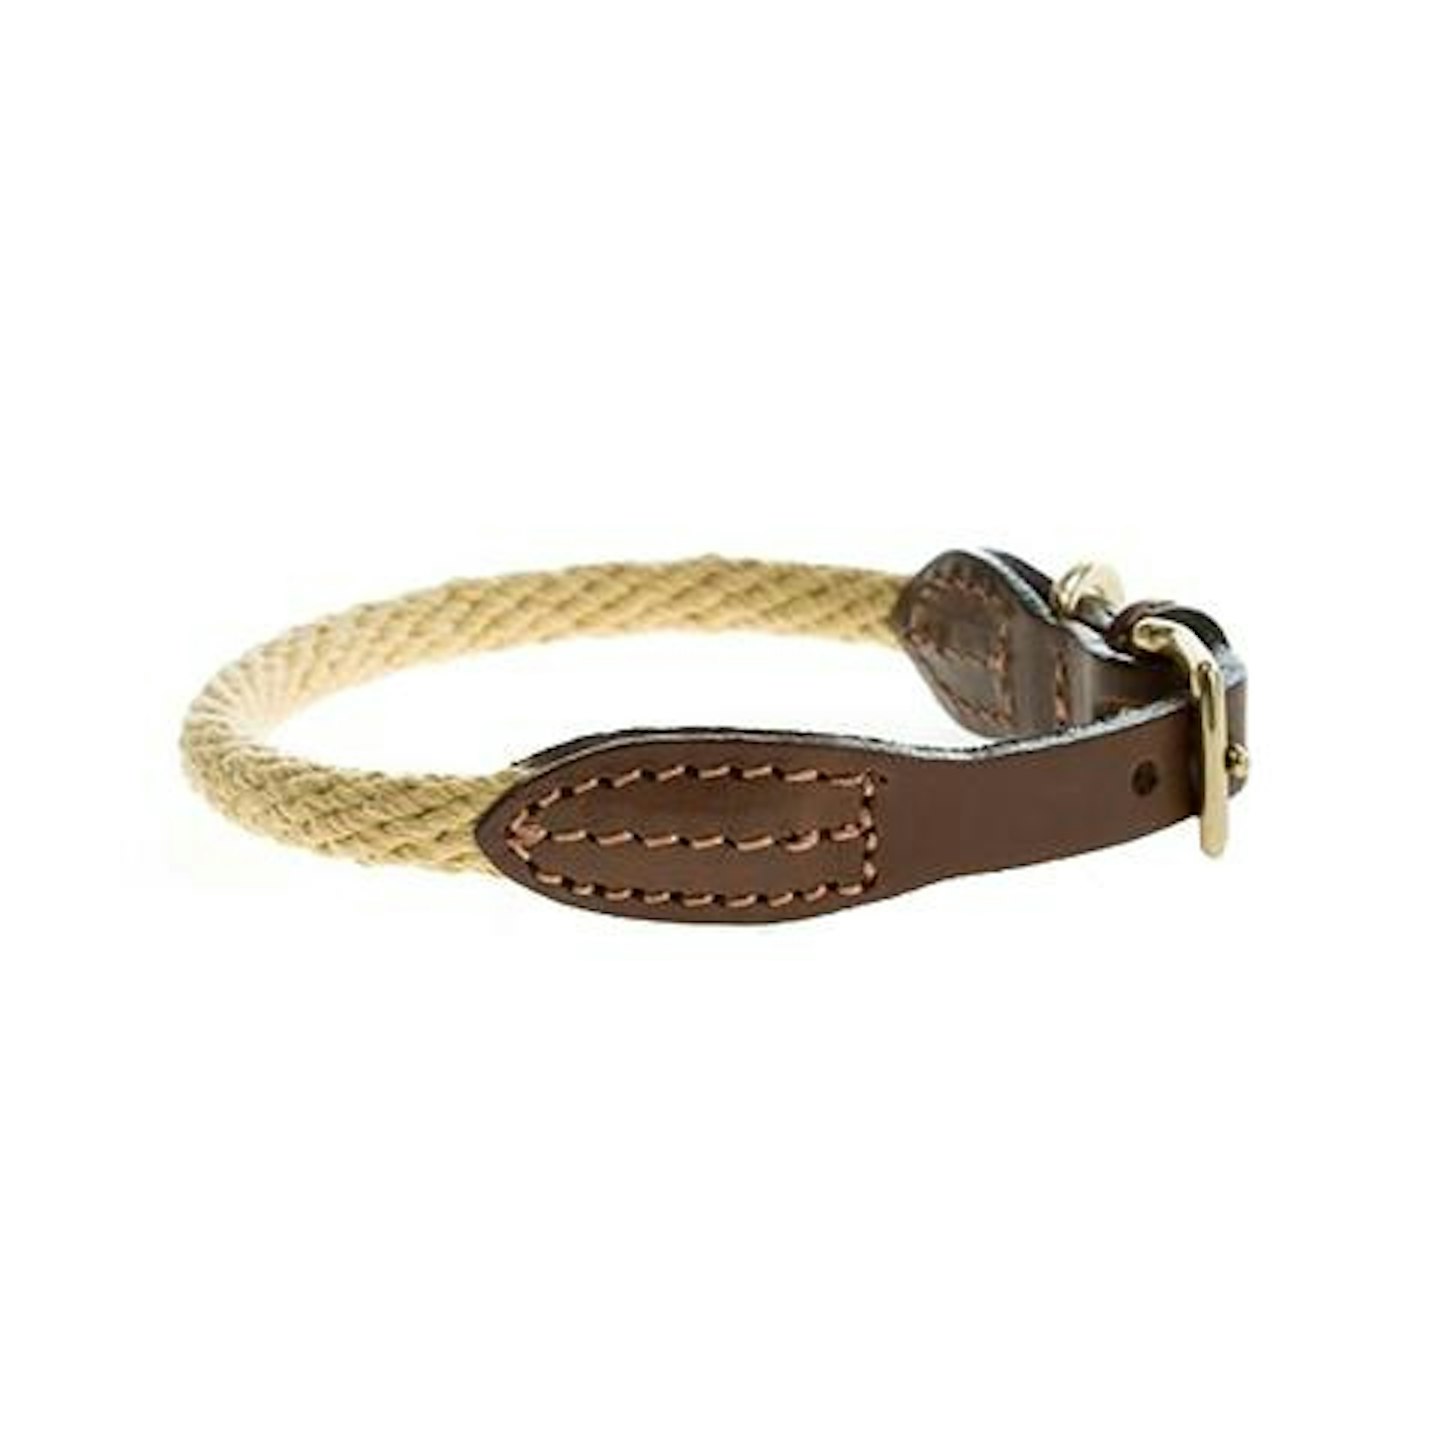 Mungo & Maud, Rope Dog Collar, £59.50